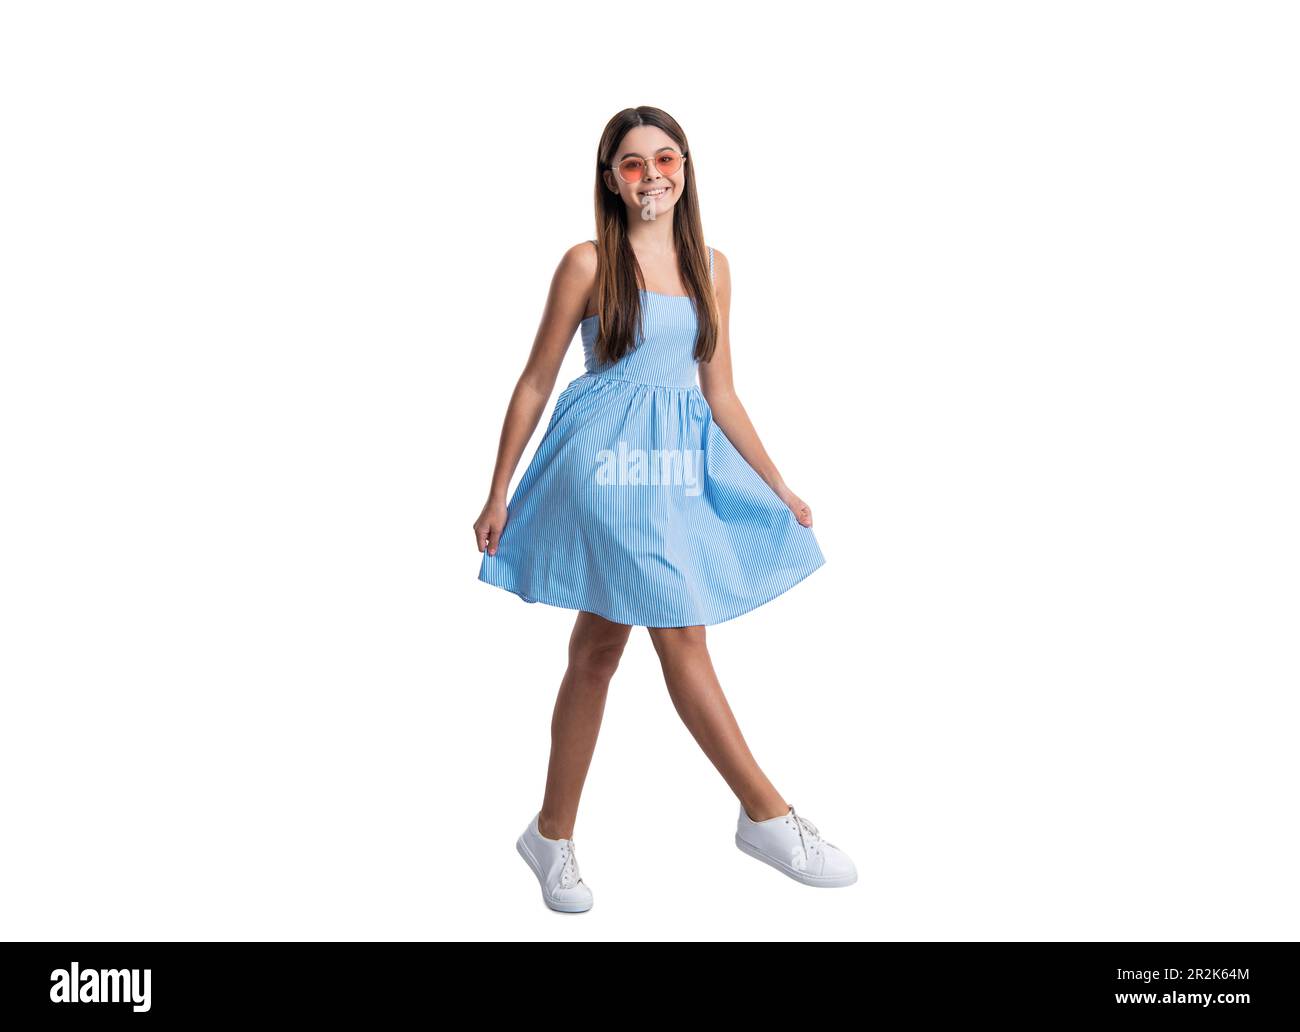 Summer dress and leggings Stock Photo - Alamy